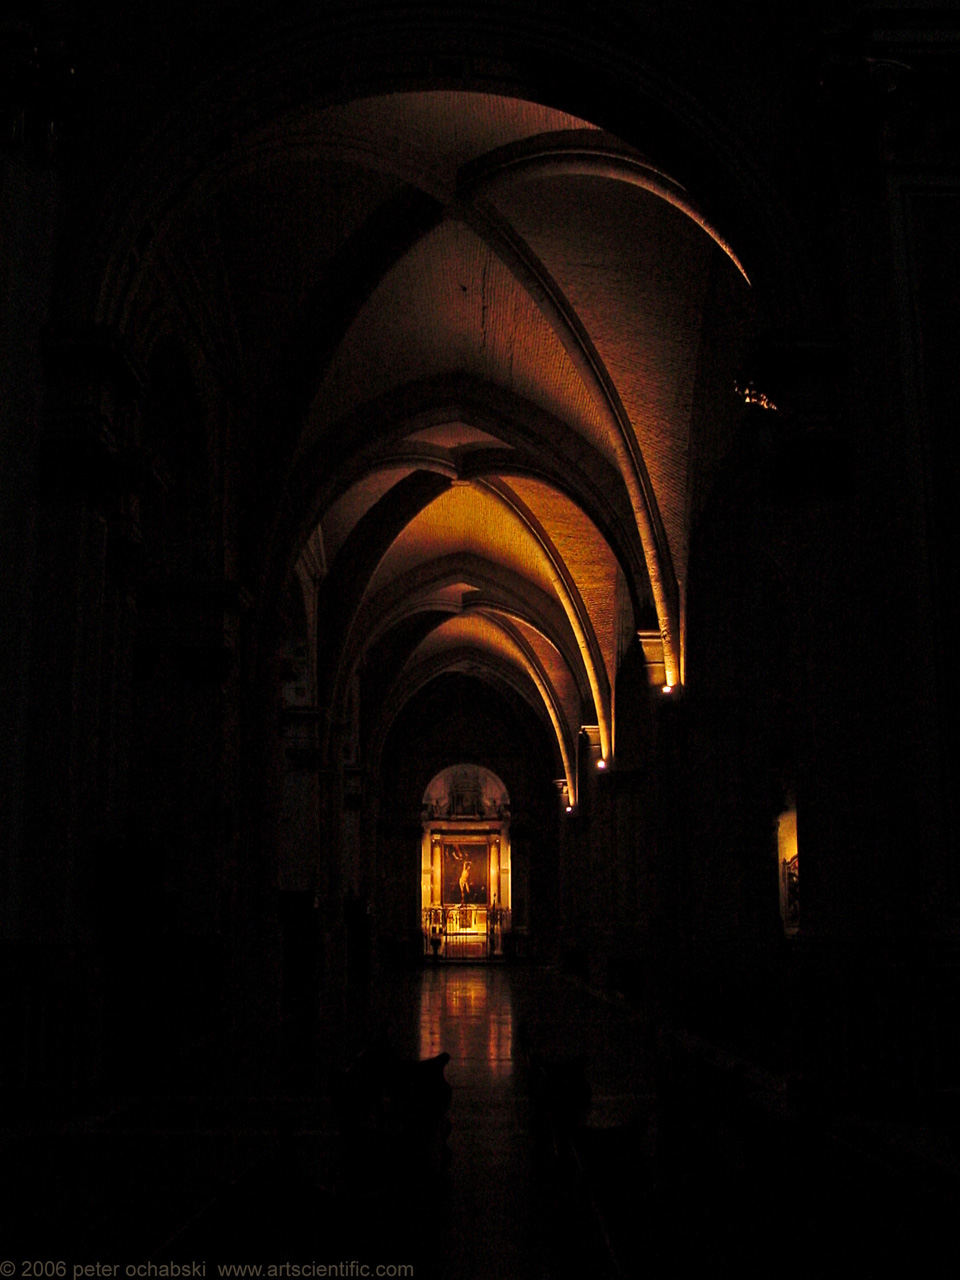 dark cathedral interior